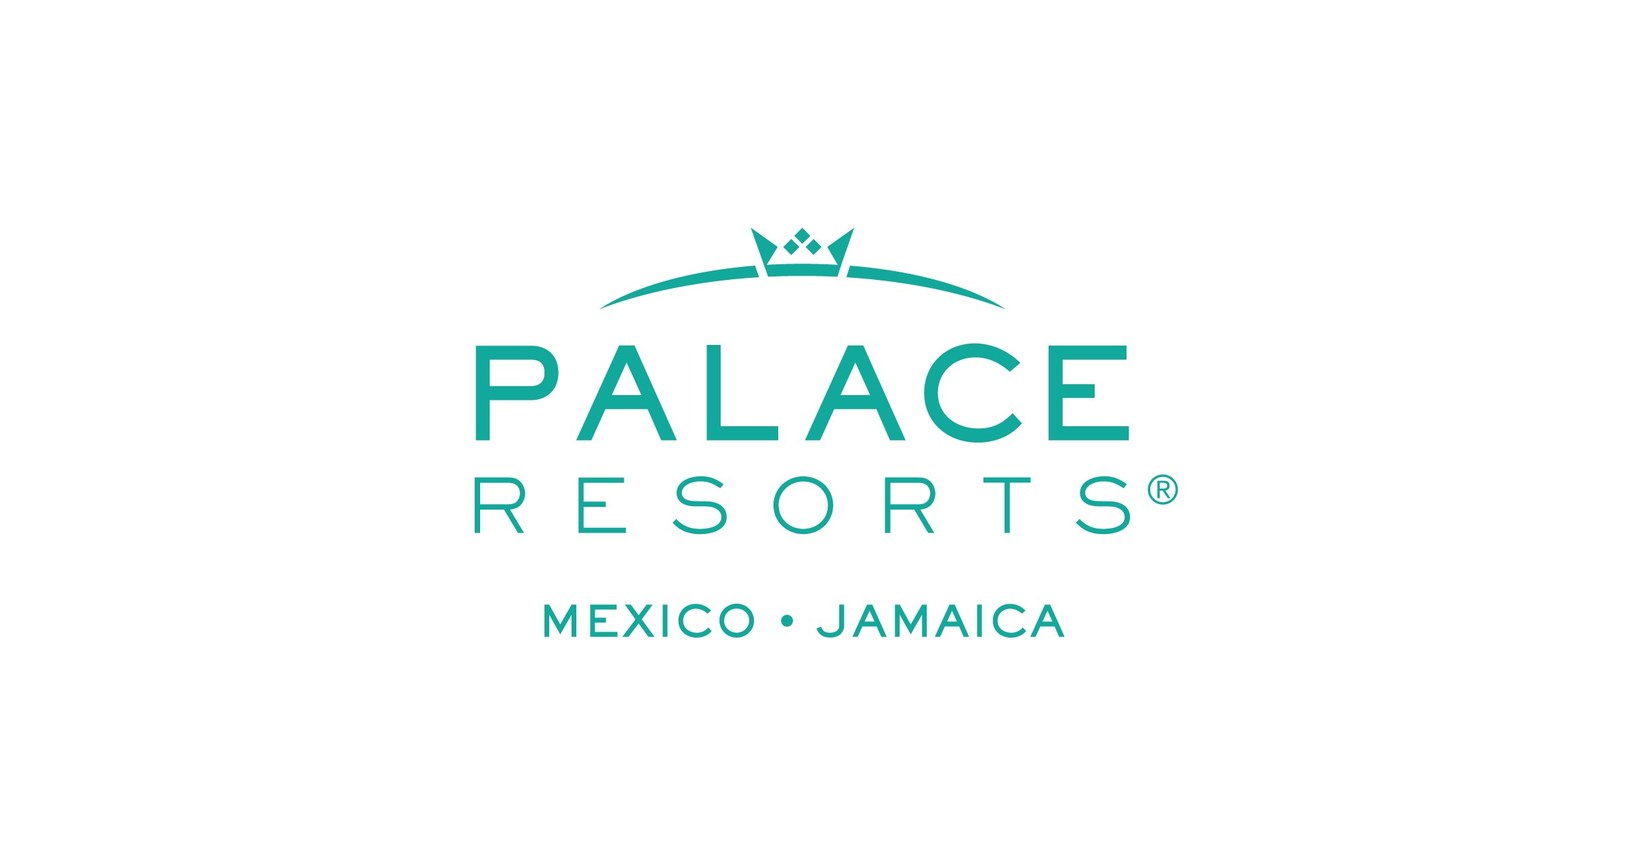 Palace Resorts Logos - Bank2home.com